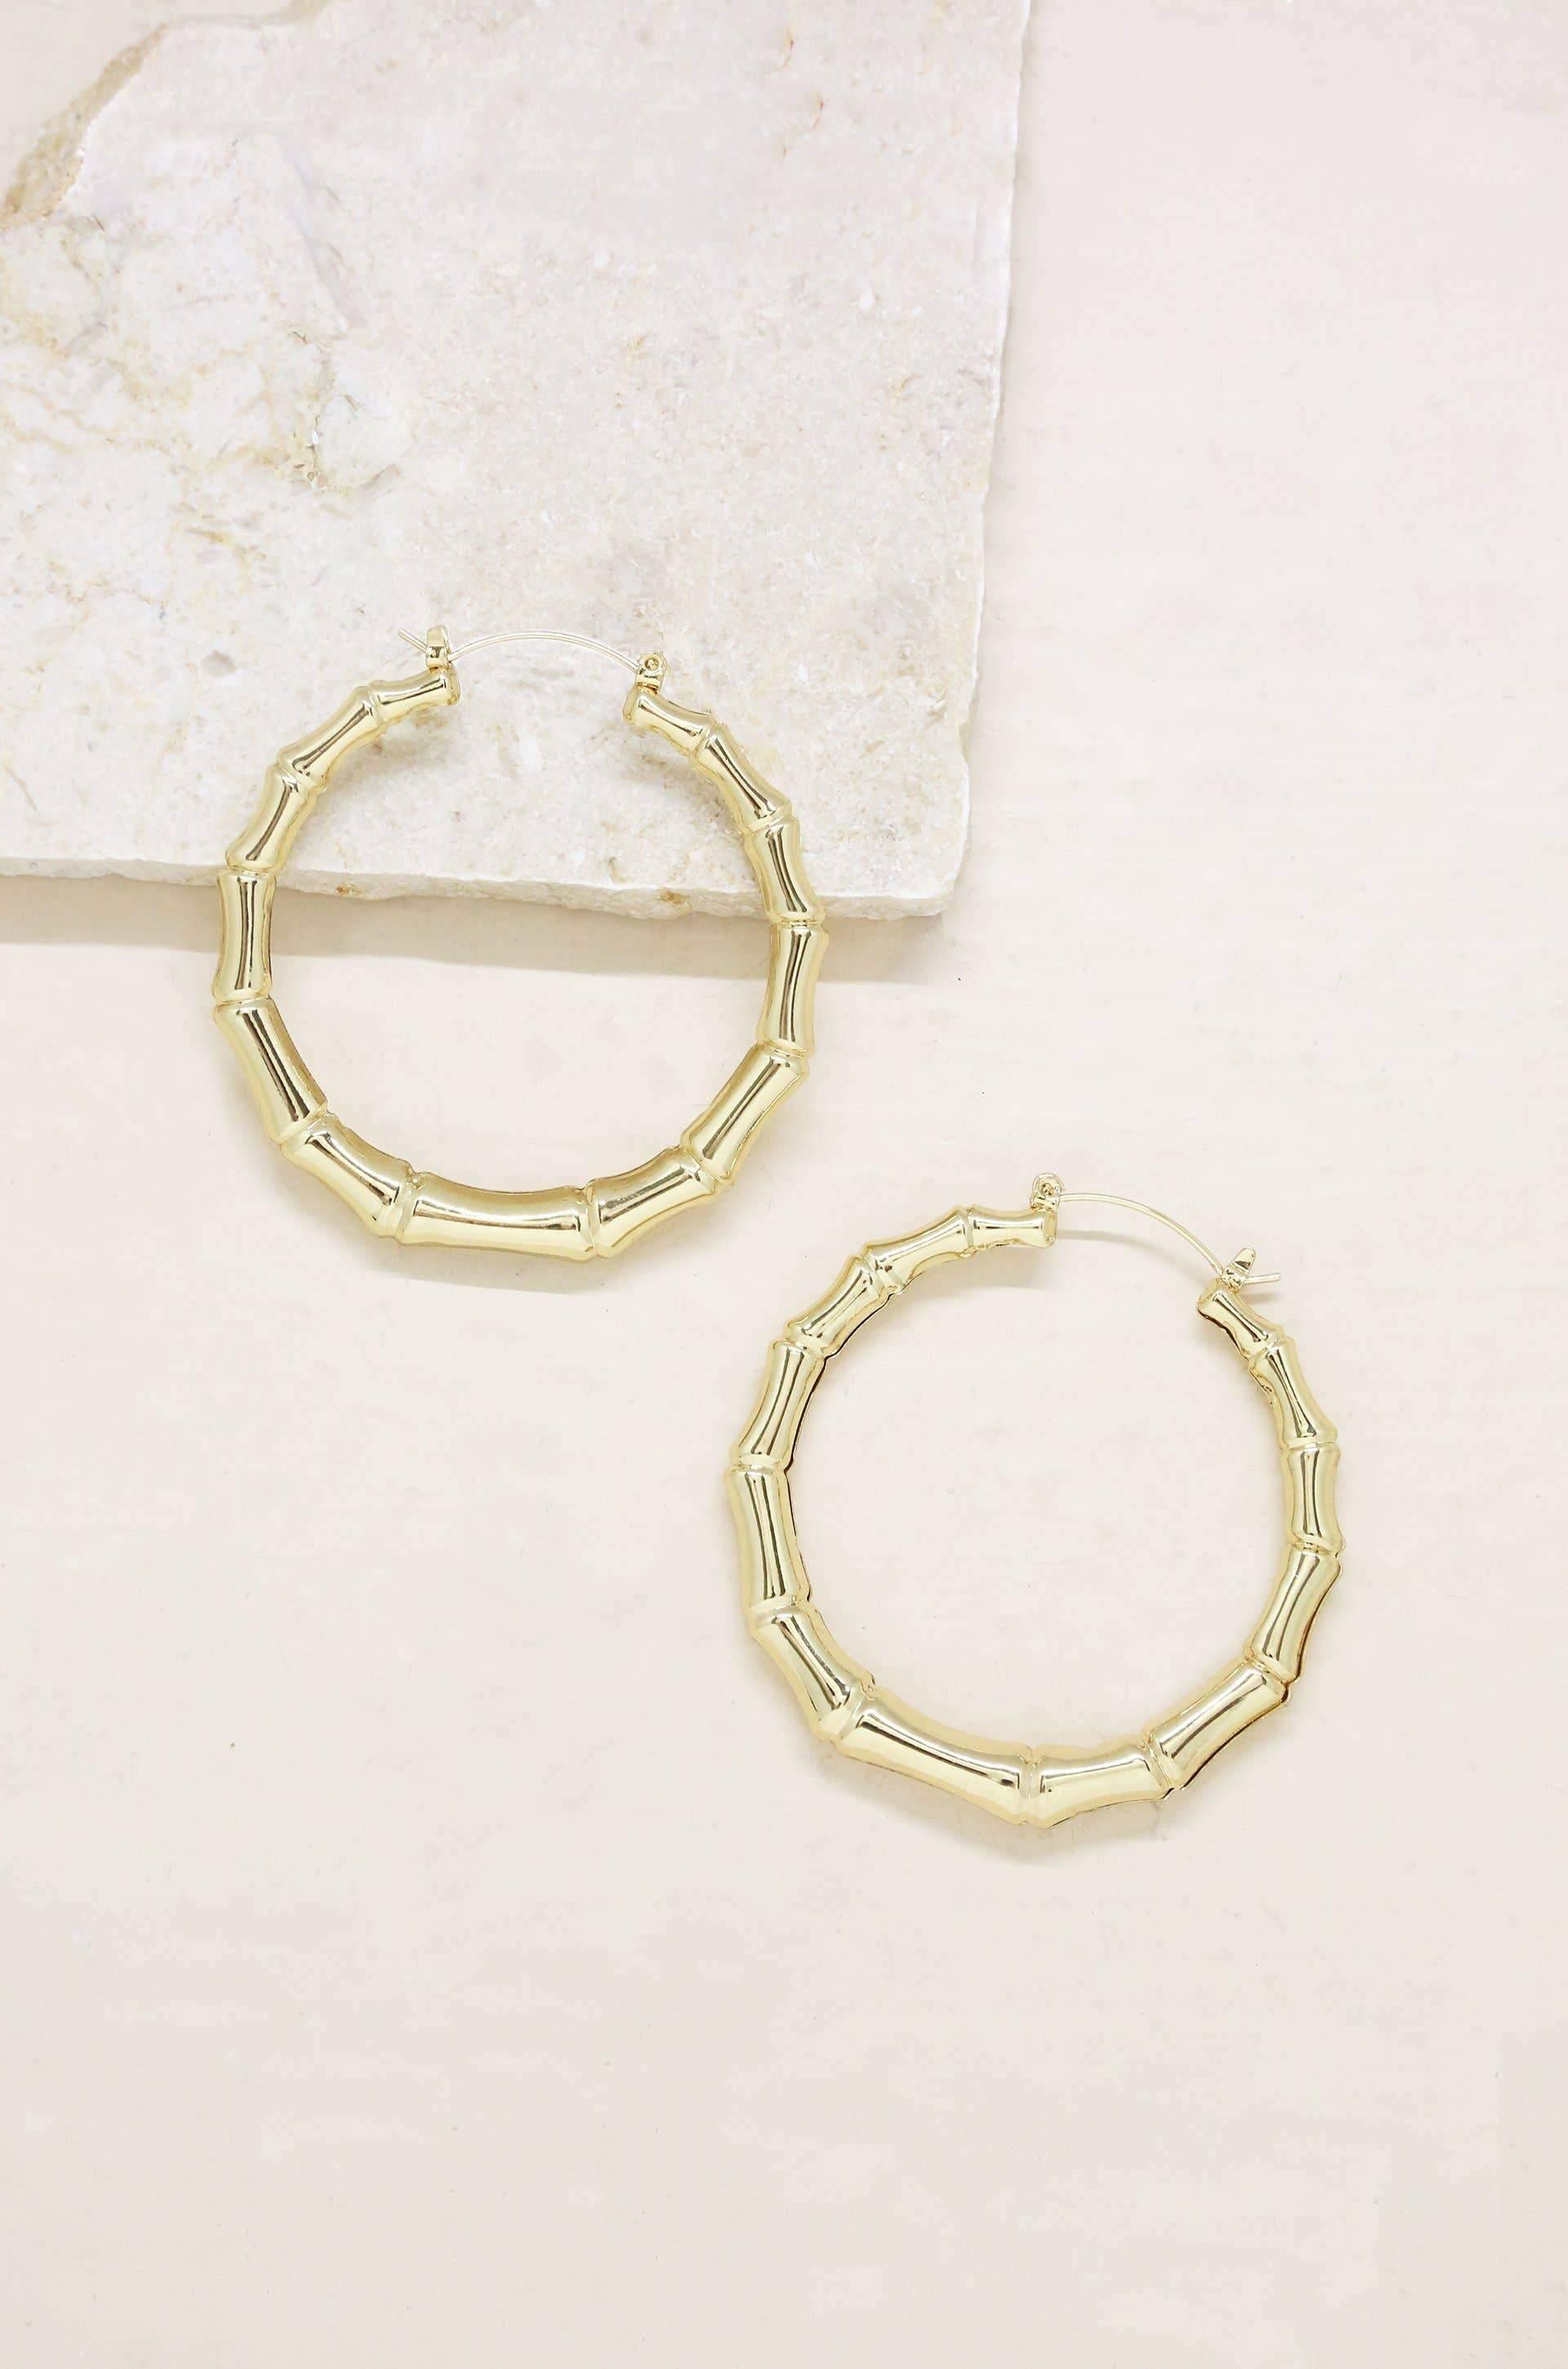 Bamboo Hoop Earrings in Gold - Sorelle Gifts